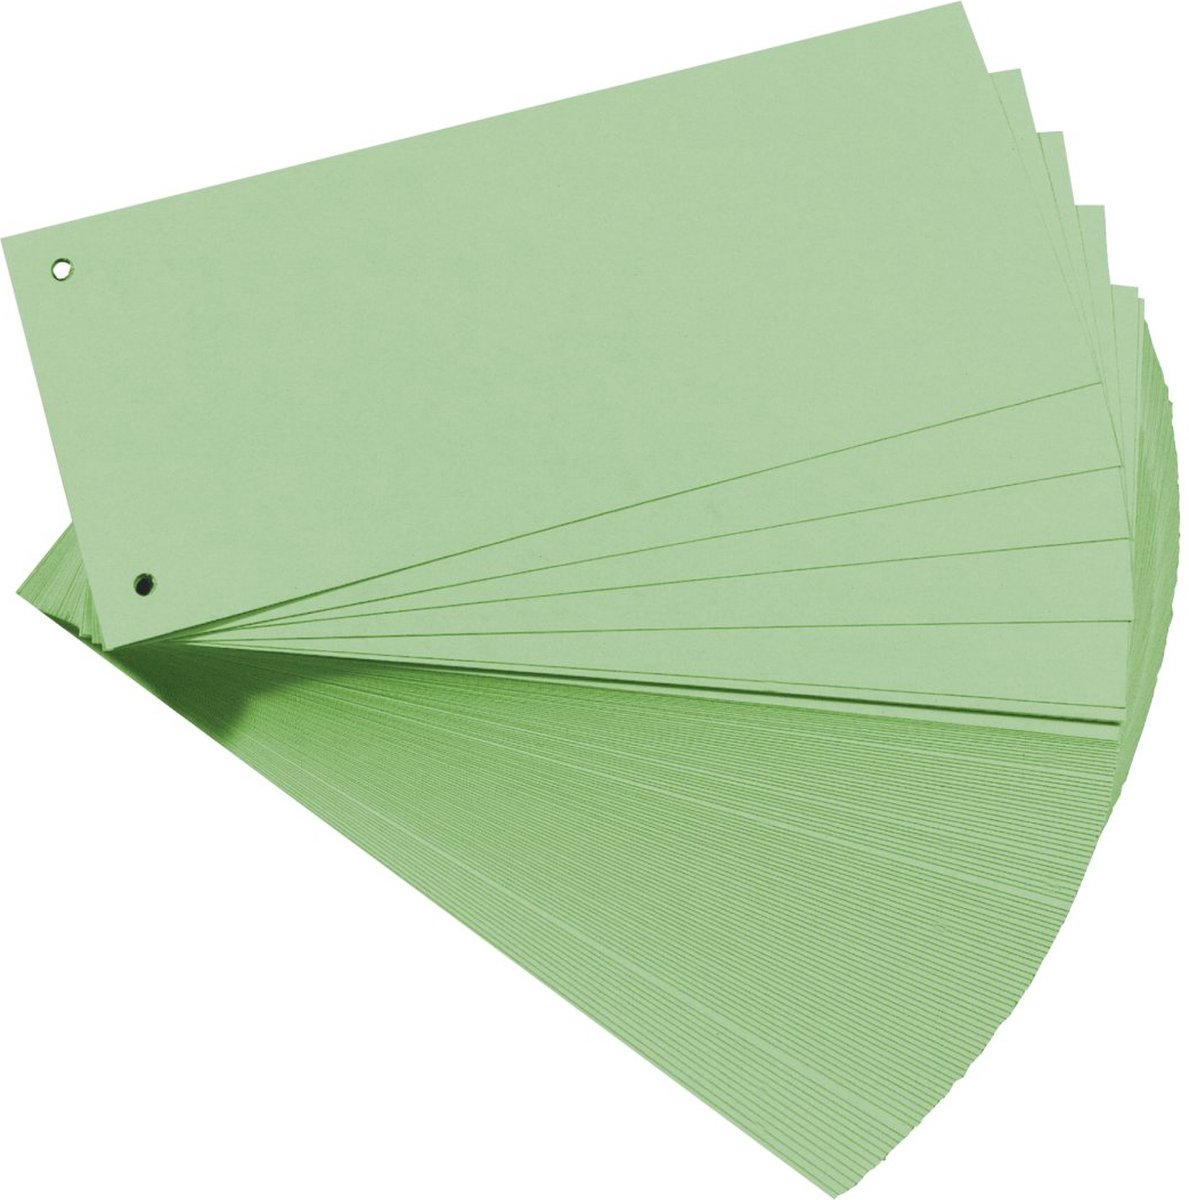 Herlitz scheidingsstroken - DIN A4 - manilla karton - groen - 100st. - Herlitz